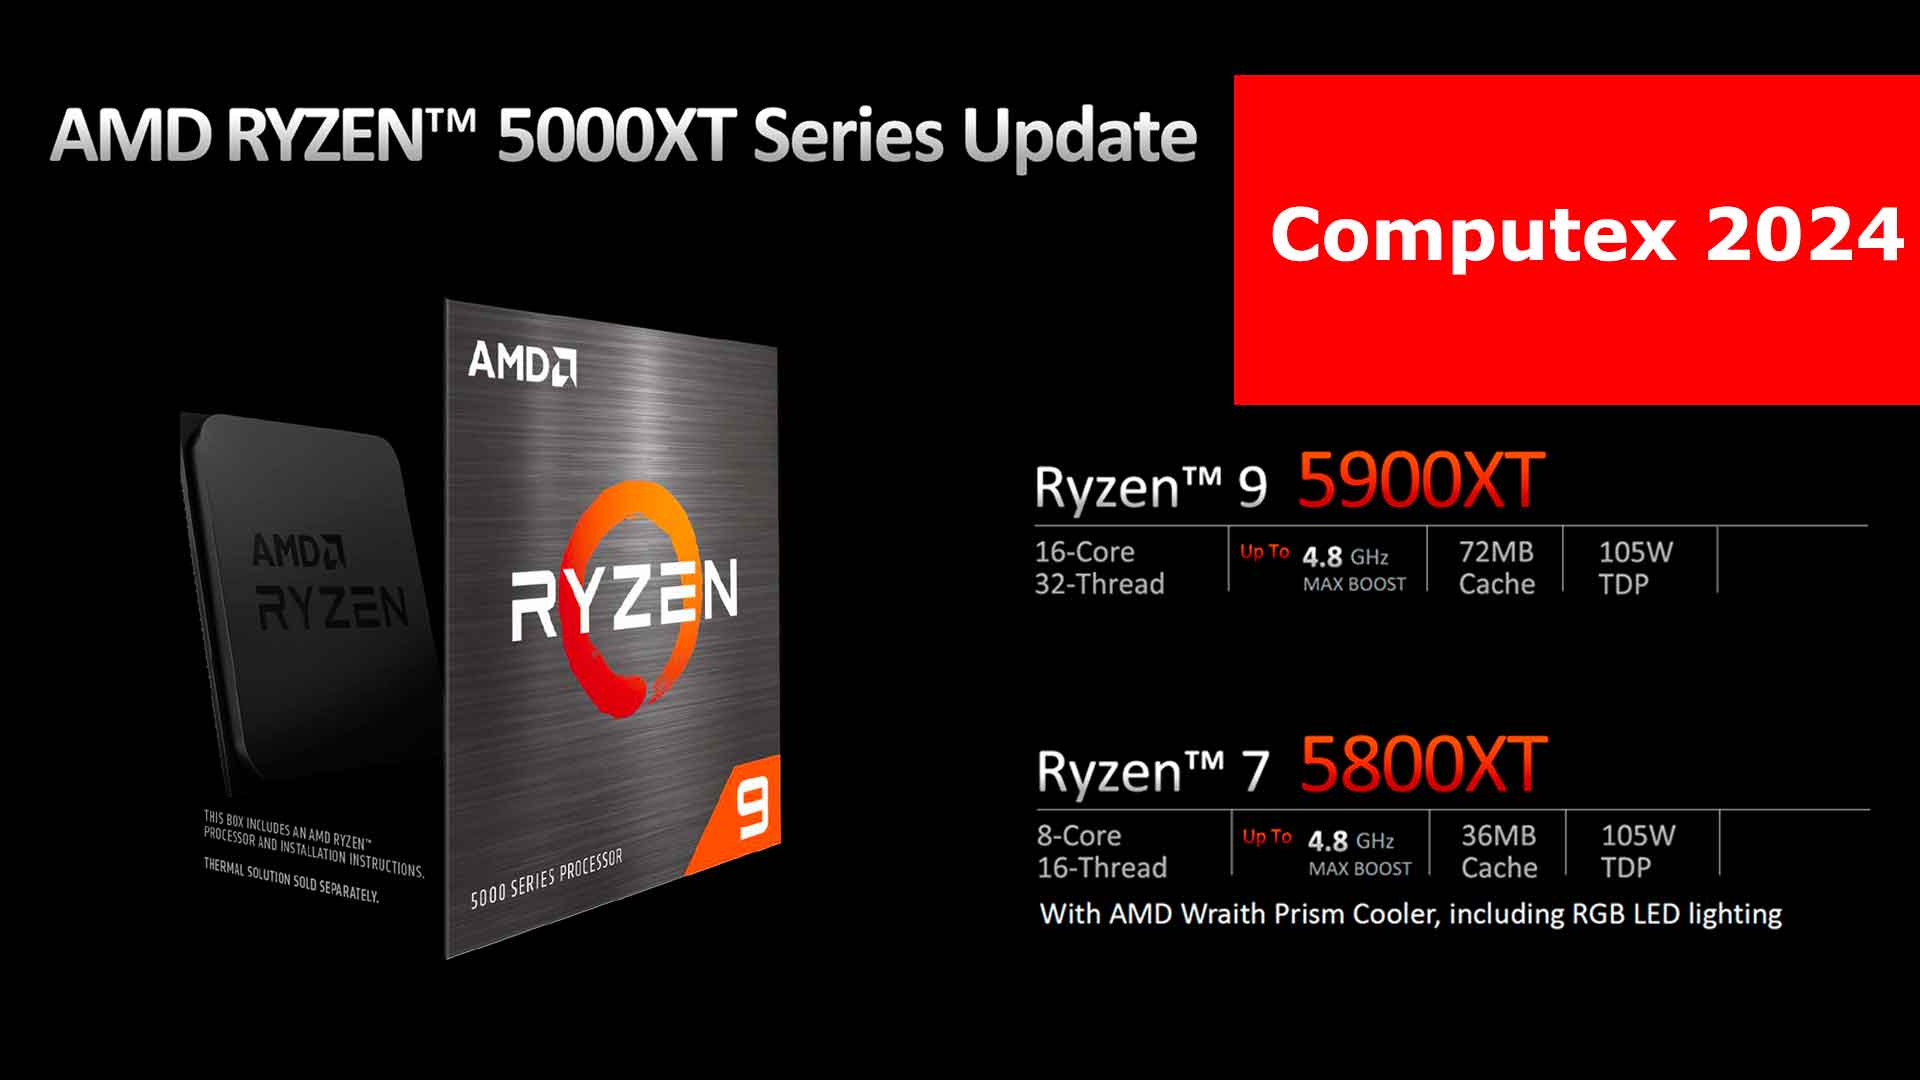 Ryzen 5000XT Series